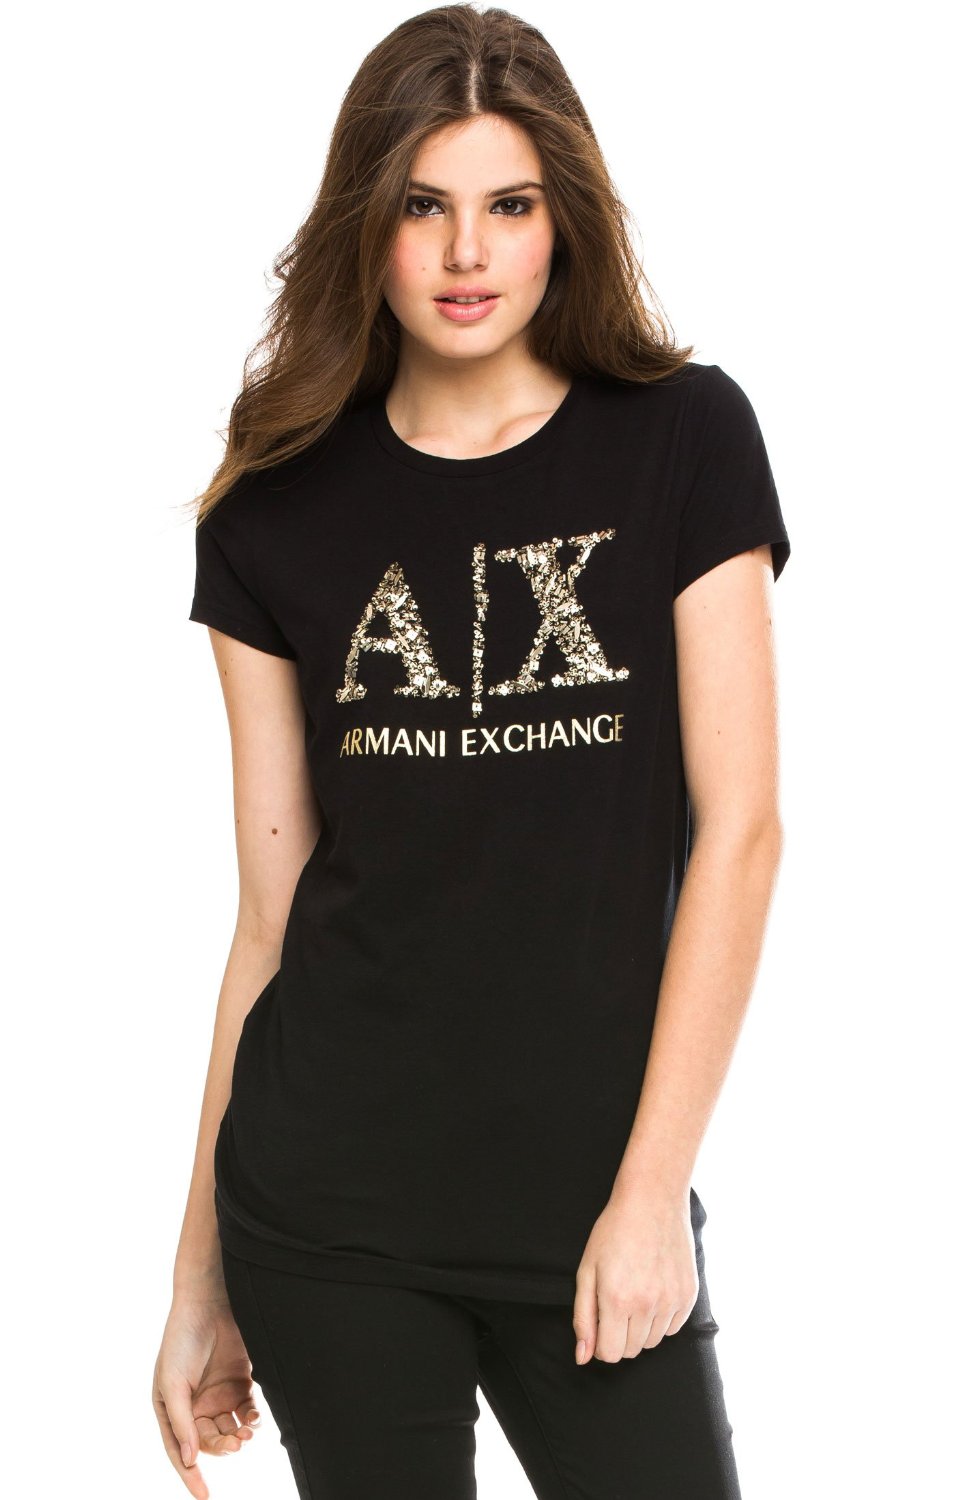 Armani women. Футболка Армани эксчендж женская. Armani Exchange 2023 футболка. Armani Exchange футболка женская. Футболка Armani Exchange женская черная.